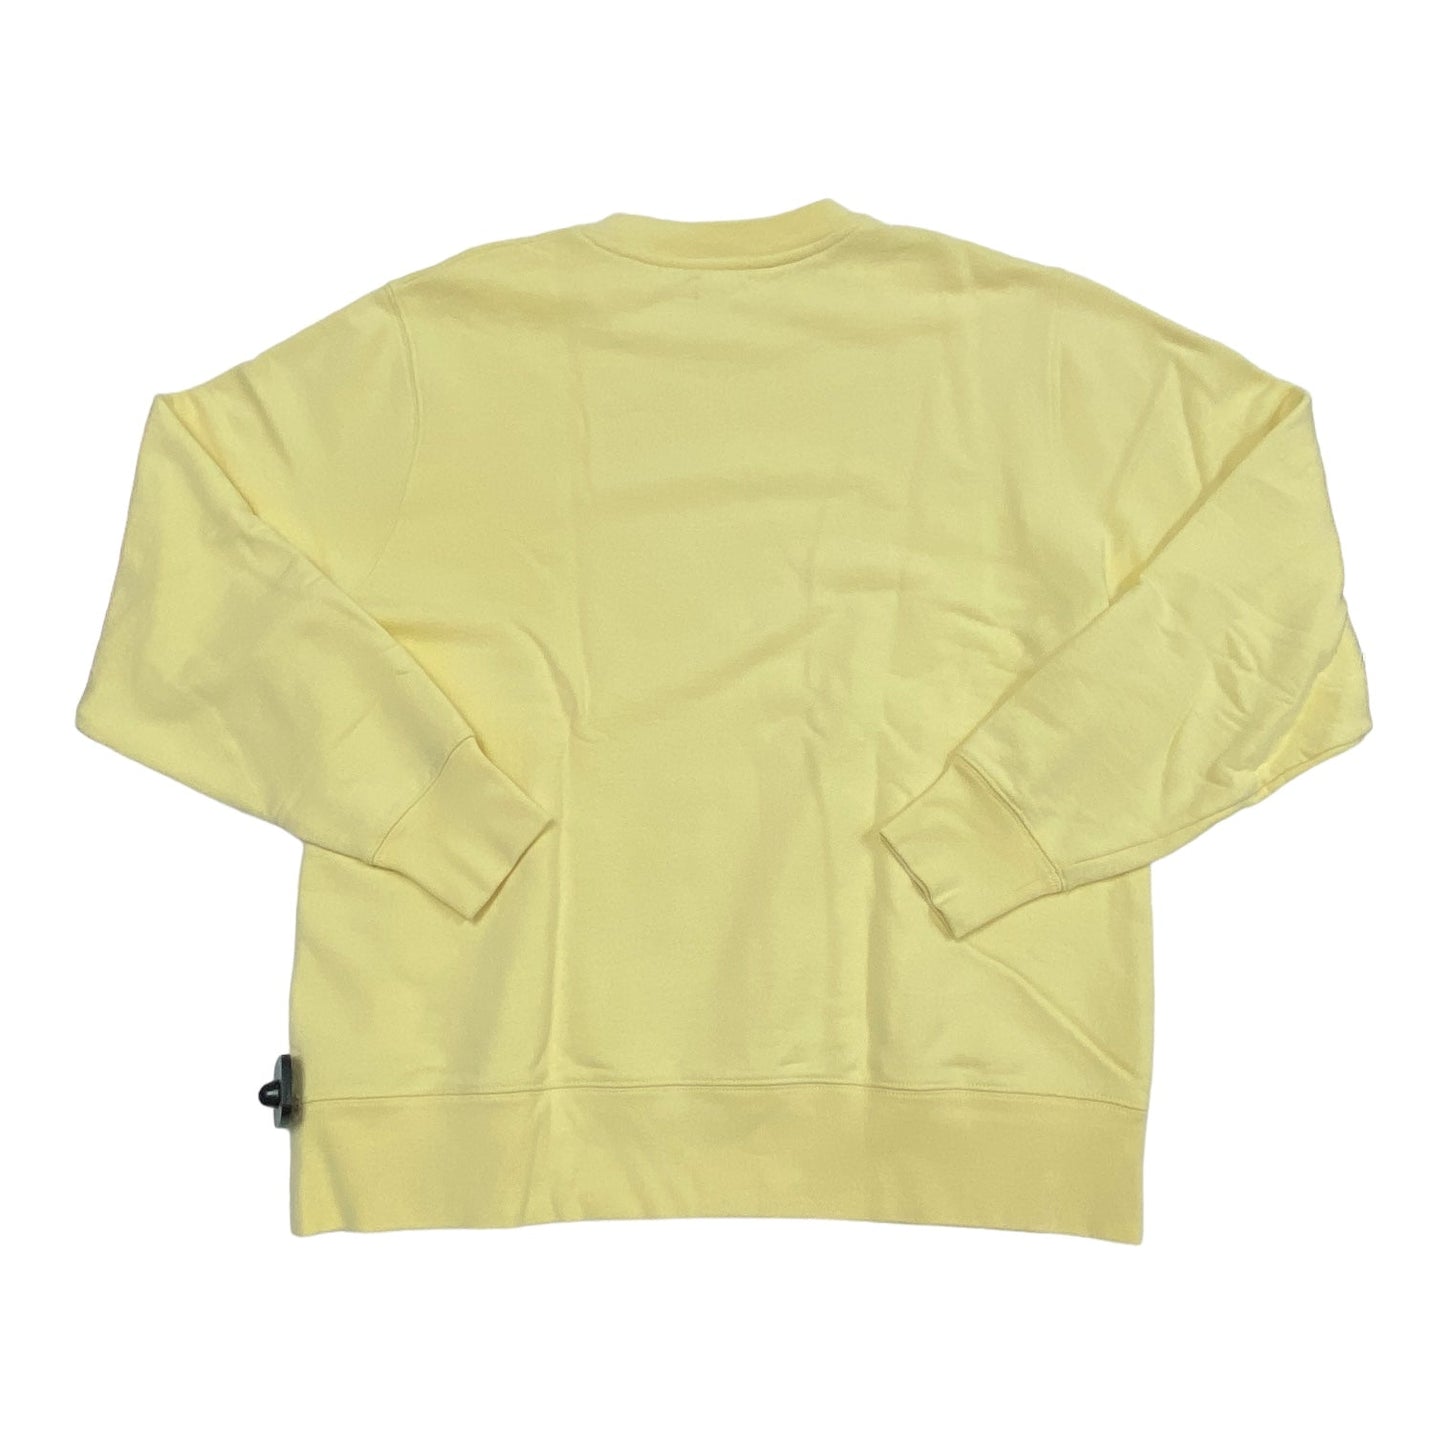 Yellow Sweatshirt Designer Tory Burch, Size L